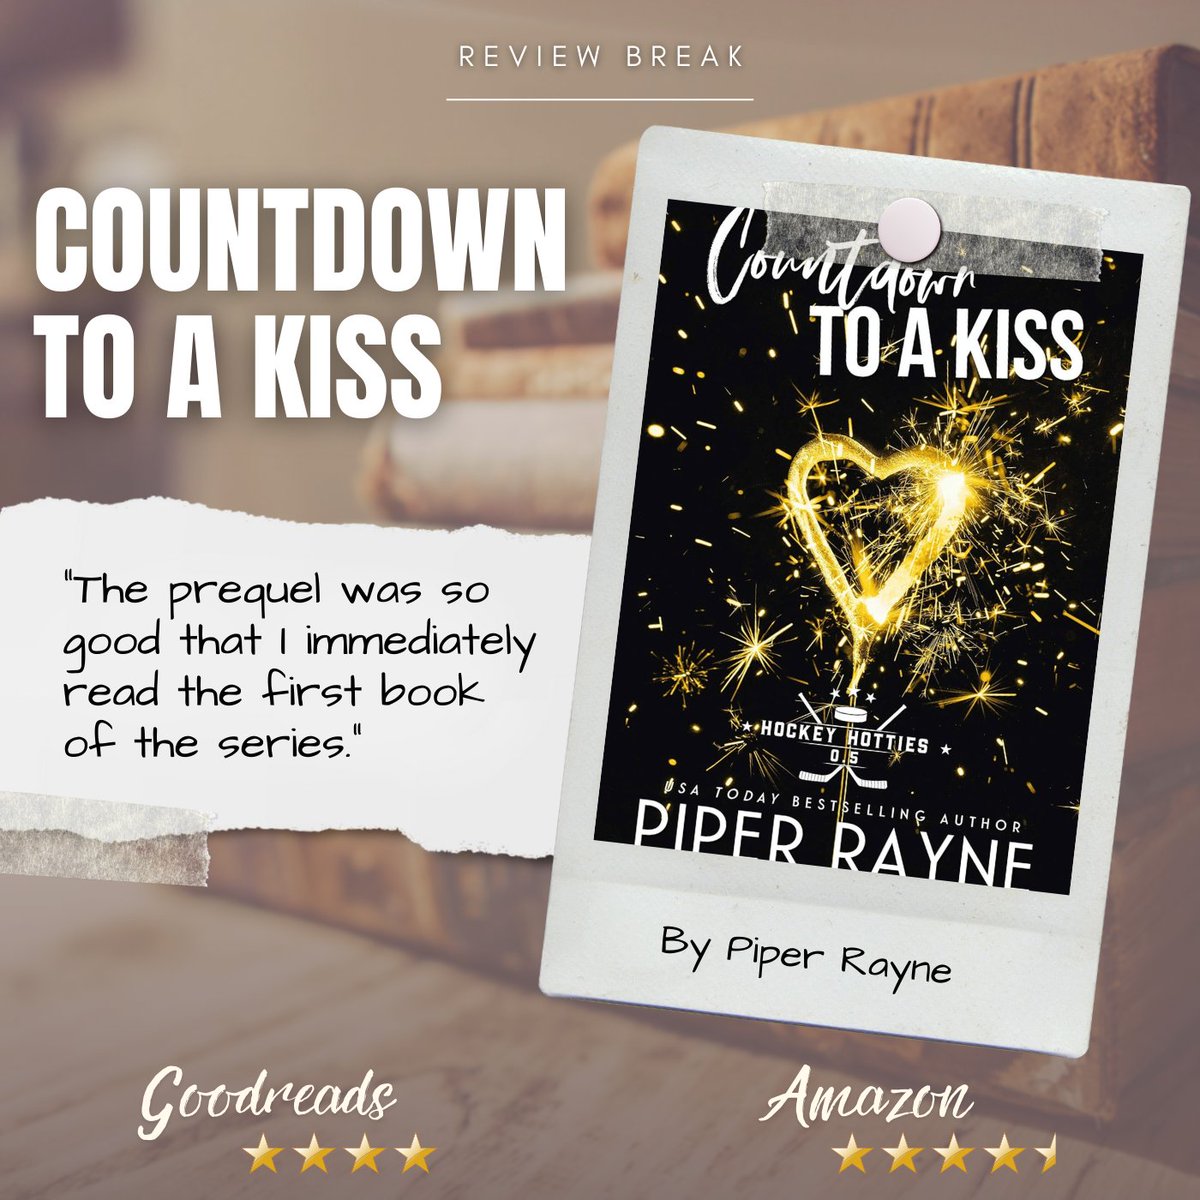 Review Break Read: Countdown to a Kiss by Piper Rayne

GoodReads Rating: ⭐️⭐️⭐️⭐️
Amazon Rating: ⭐️⭐️⭐️⭐️1/2

amzn.to/3Wk8Cpa

#piperrayne #countdowntoakiss #hockeyromance #chanceencounter #holidayromance #romanticcomedybook #bookrecommendation #romancelandia